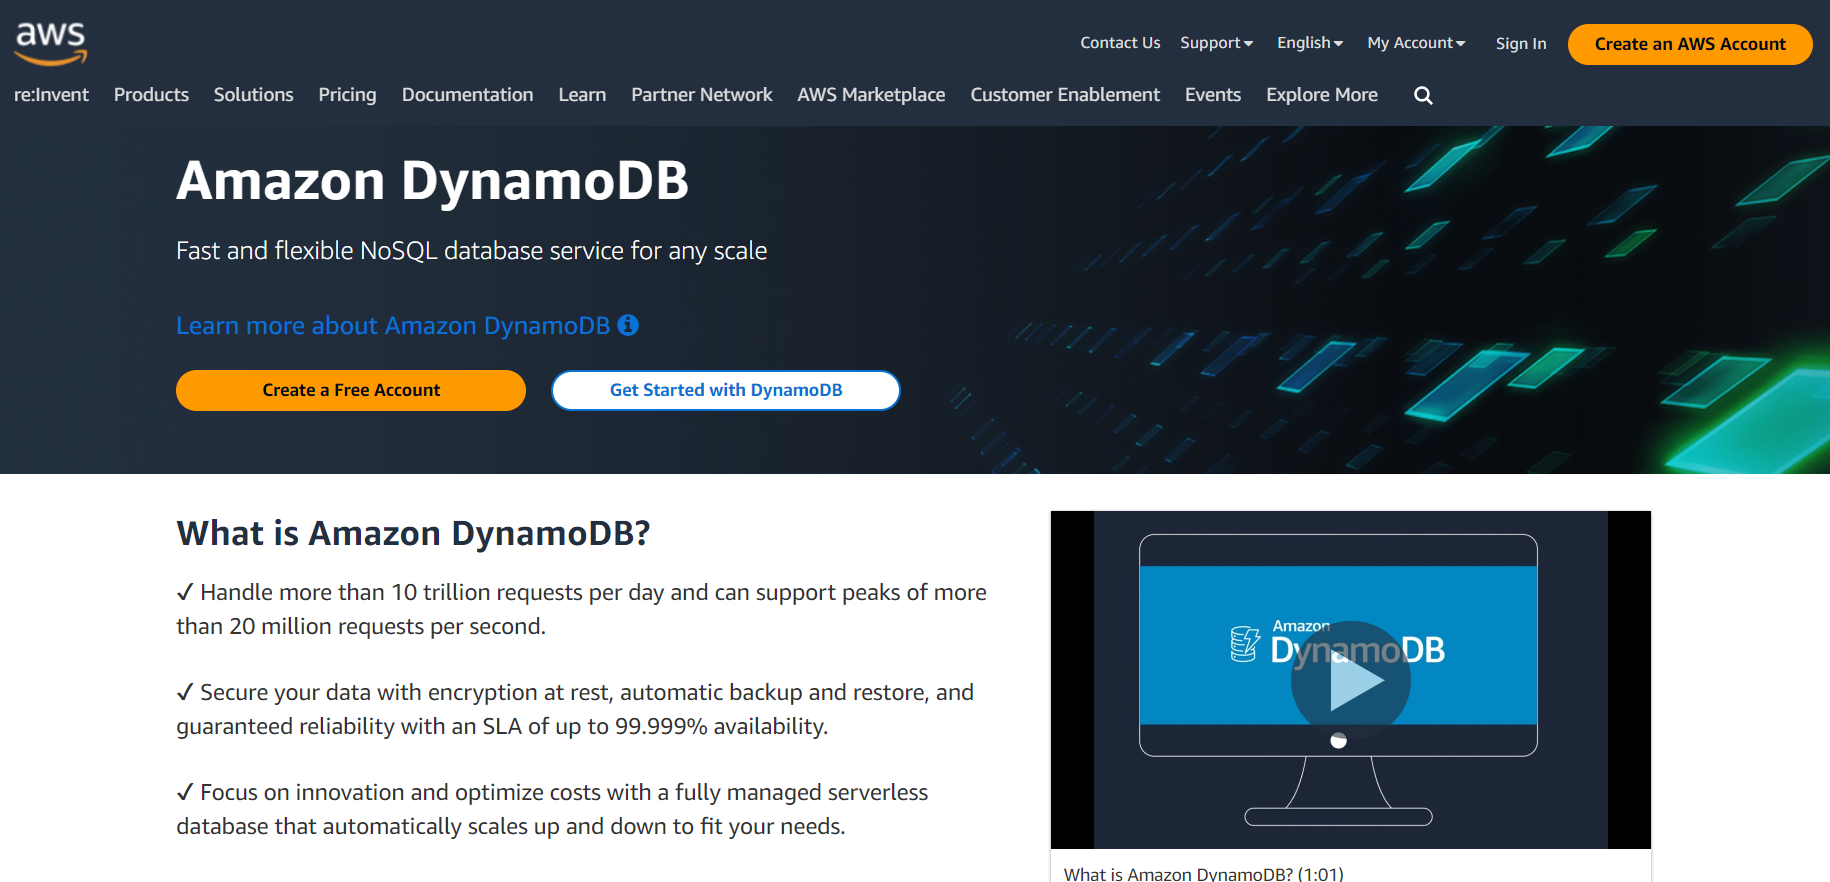 Amazon DynamoDB for data management